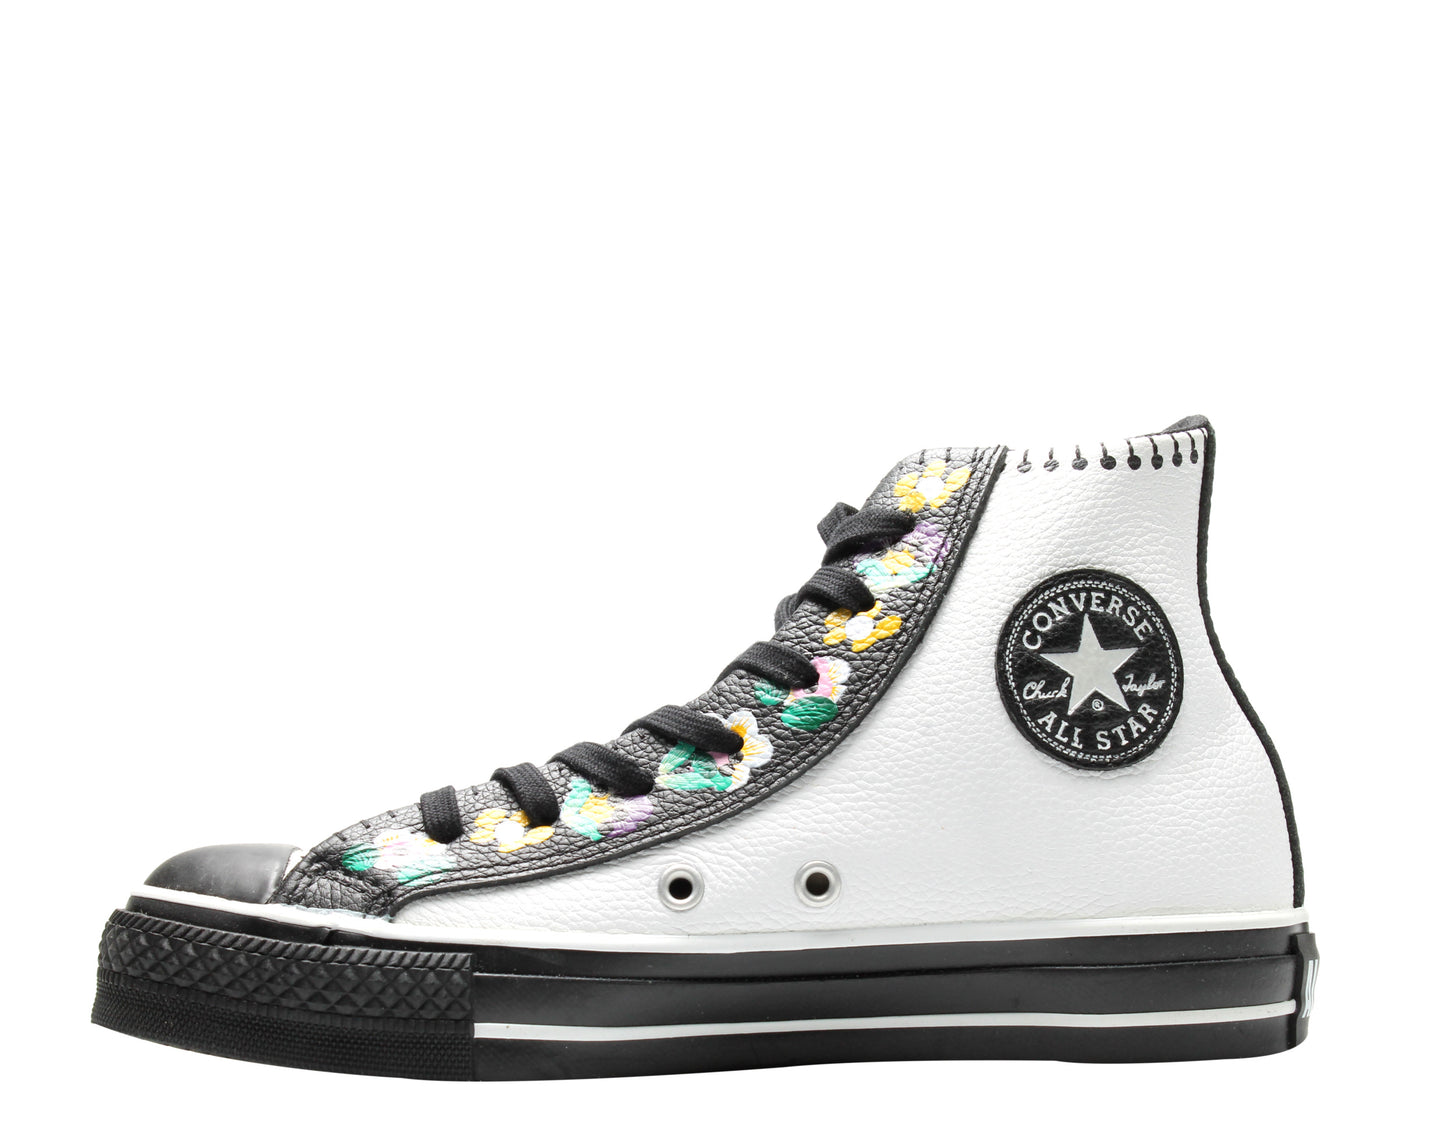 Converse Chuck Taylor All Star Matryoshka White/Black High Top Sneakers 1V338